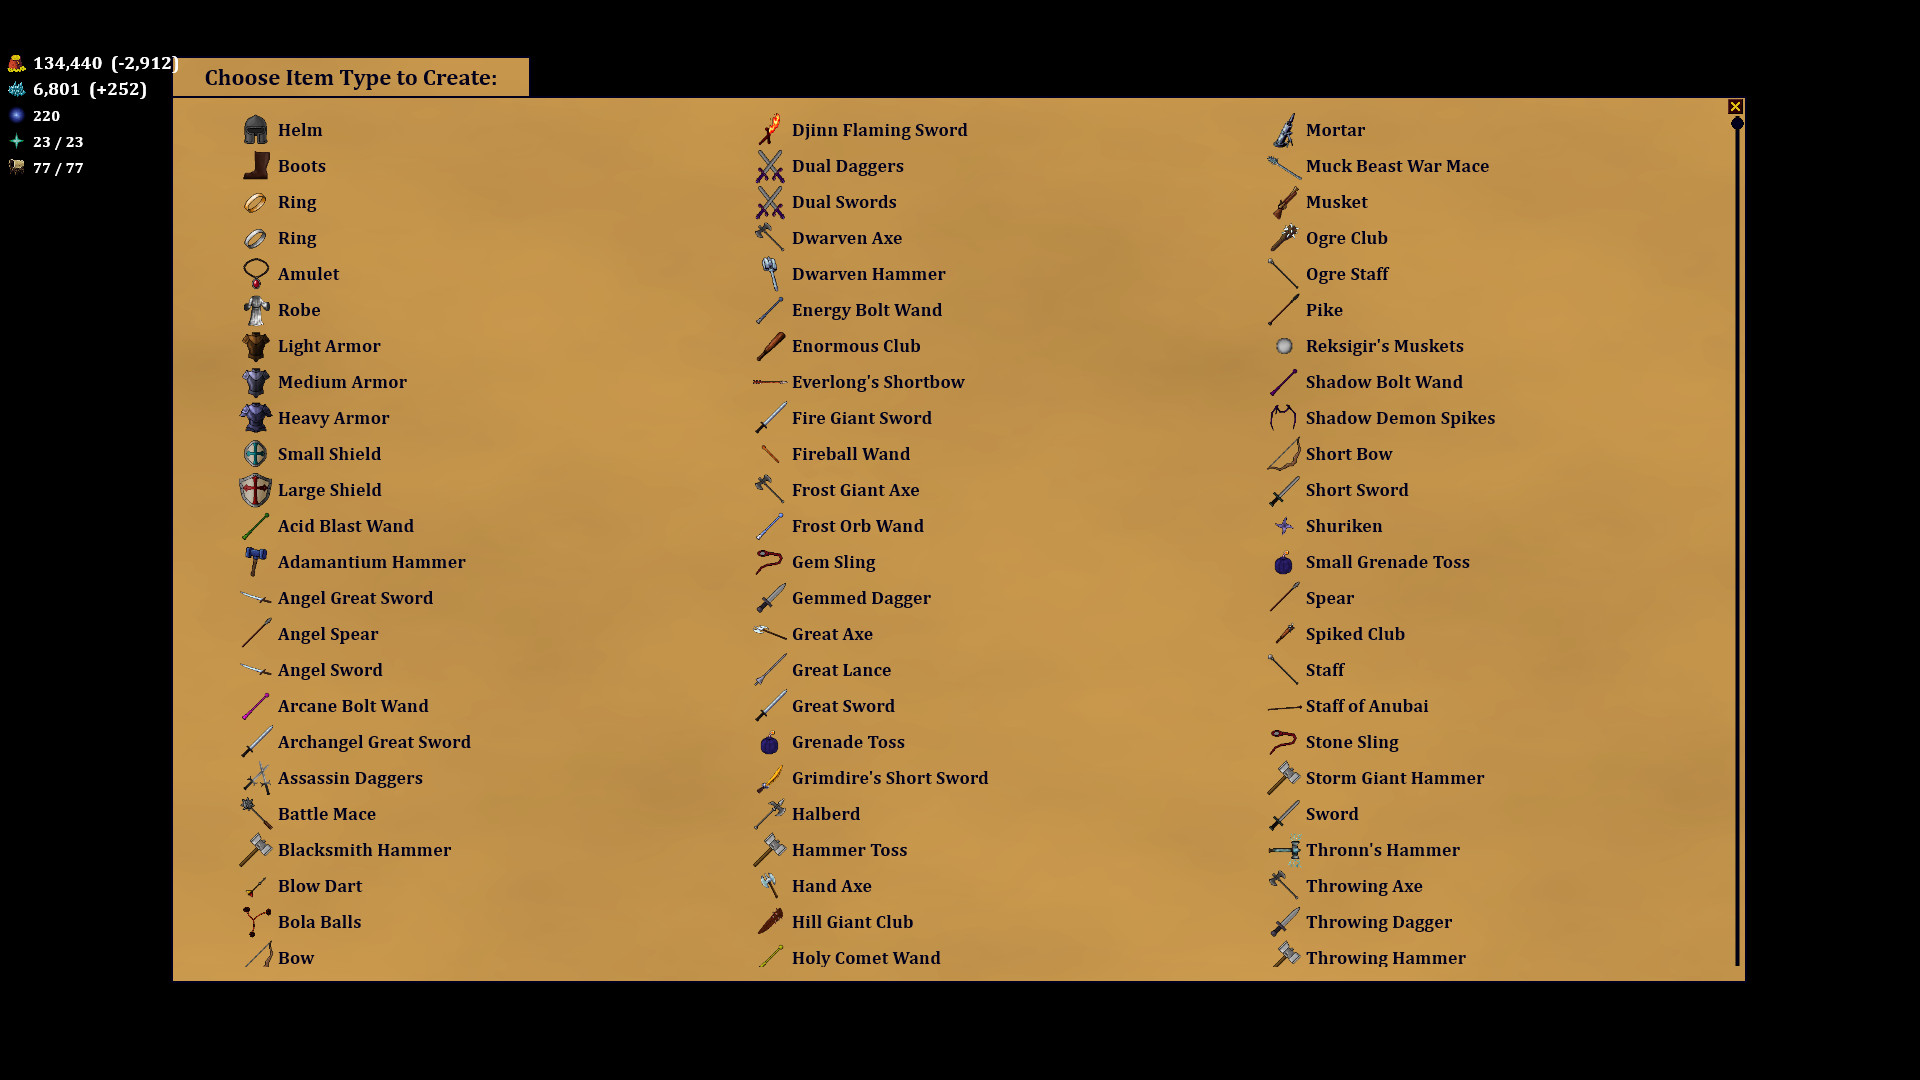 Deity Empires screenshot